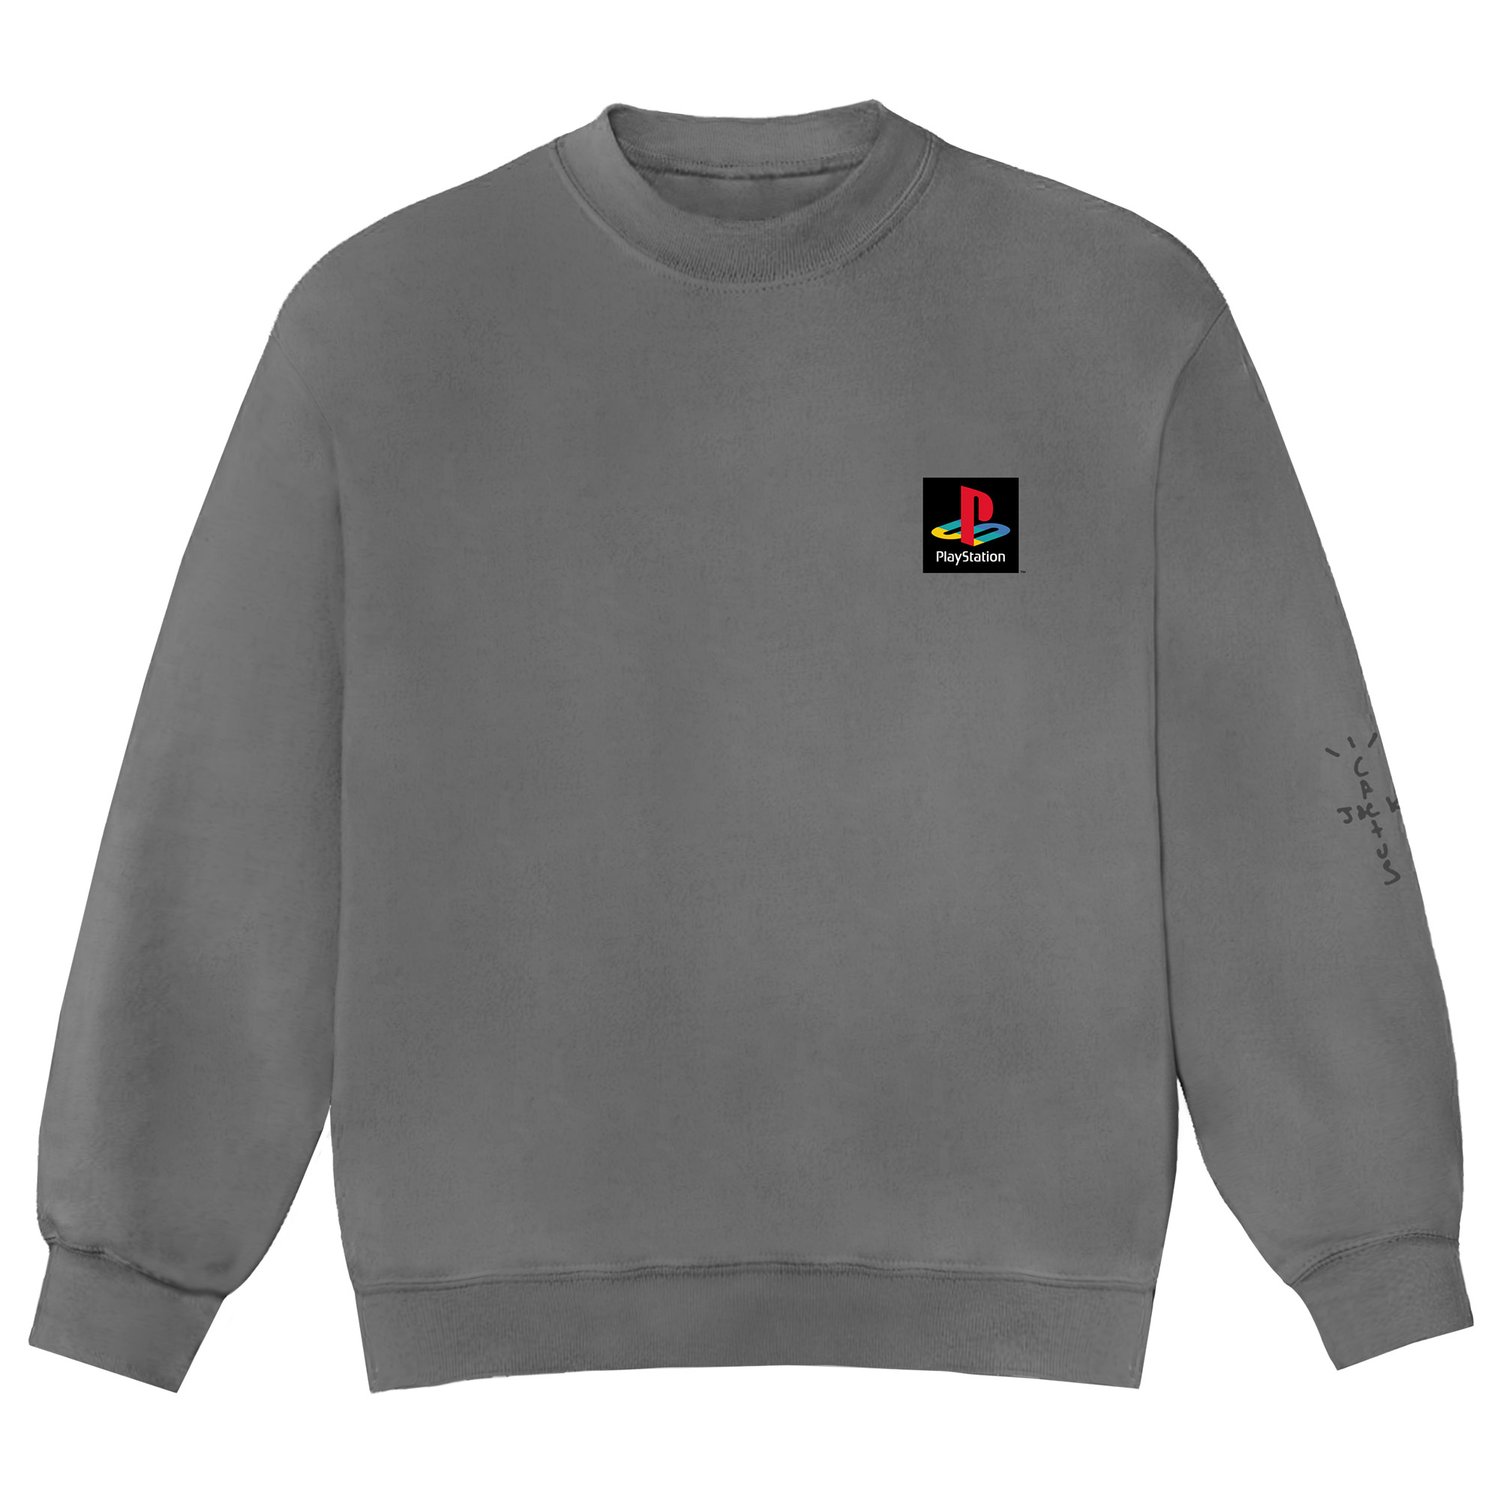 PS4 Playstation Crewneck Gaming Men's Sweatshirt Pullover Adult Sizes S-2XL